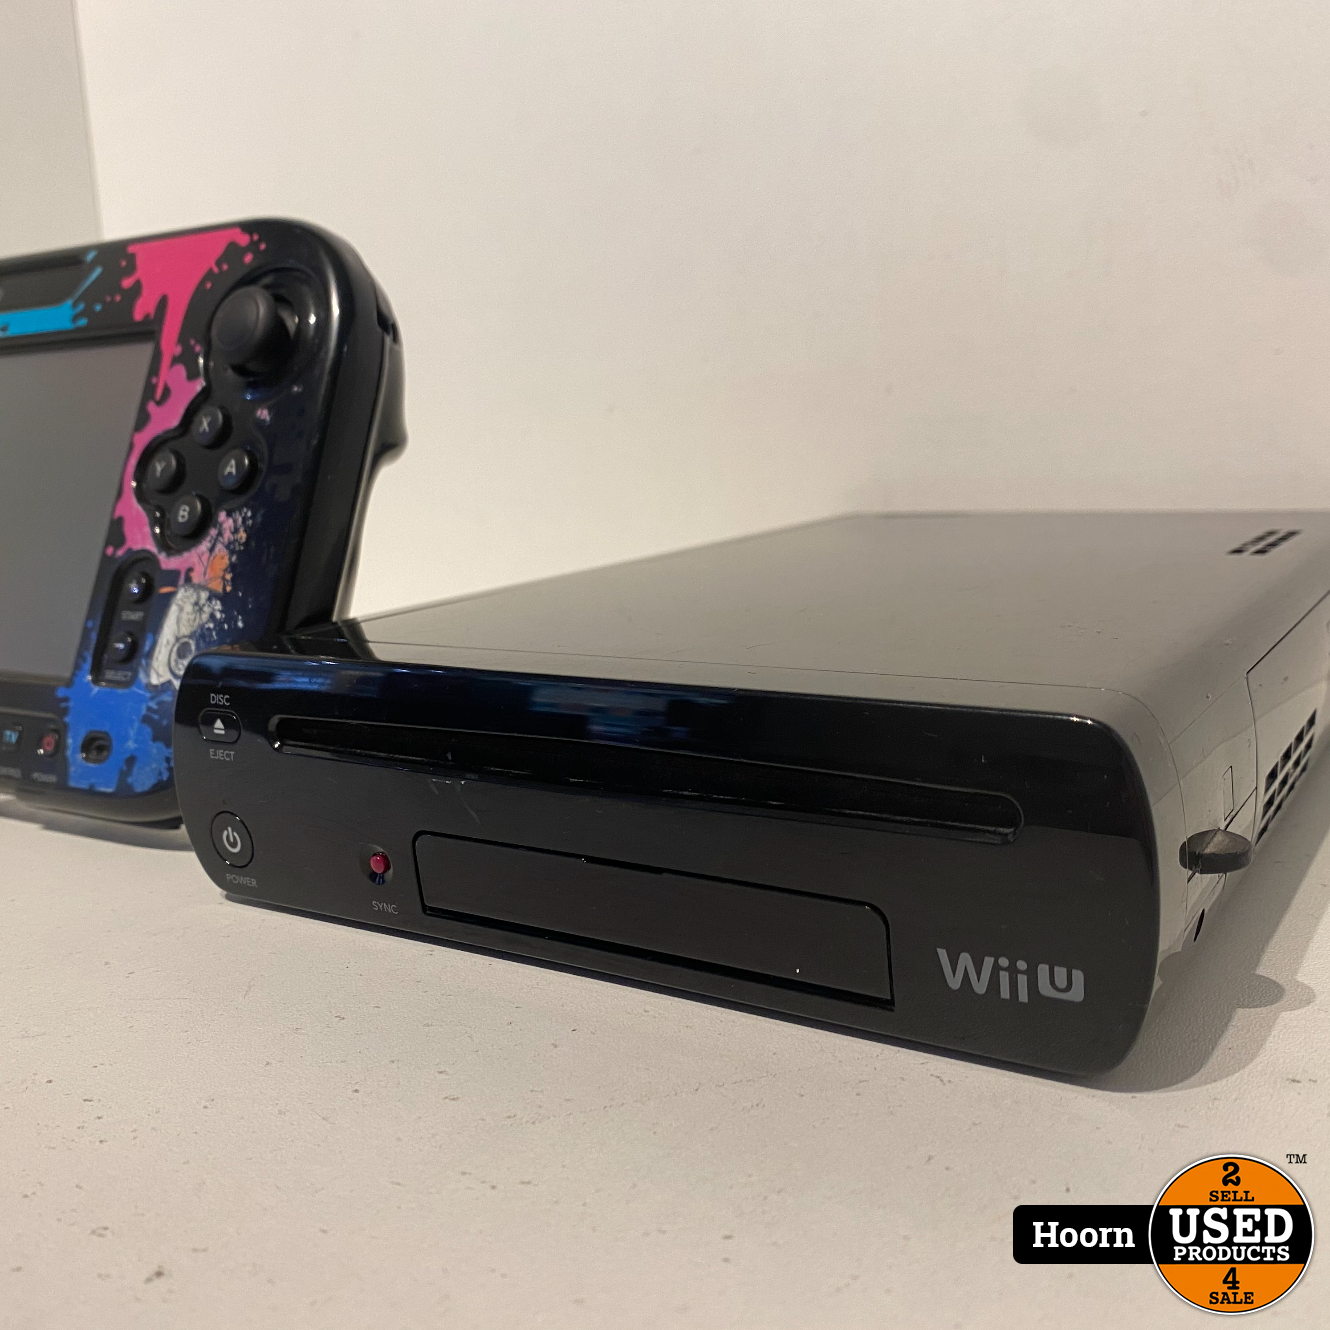 Ophef Socialistisch Puur Nintendo Wii U 32GB Zwart Compleet incl. Hoes - Used Products Hoorn